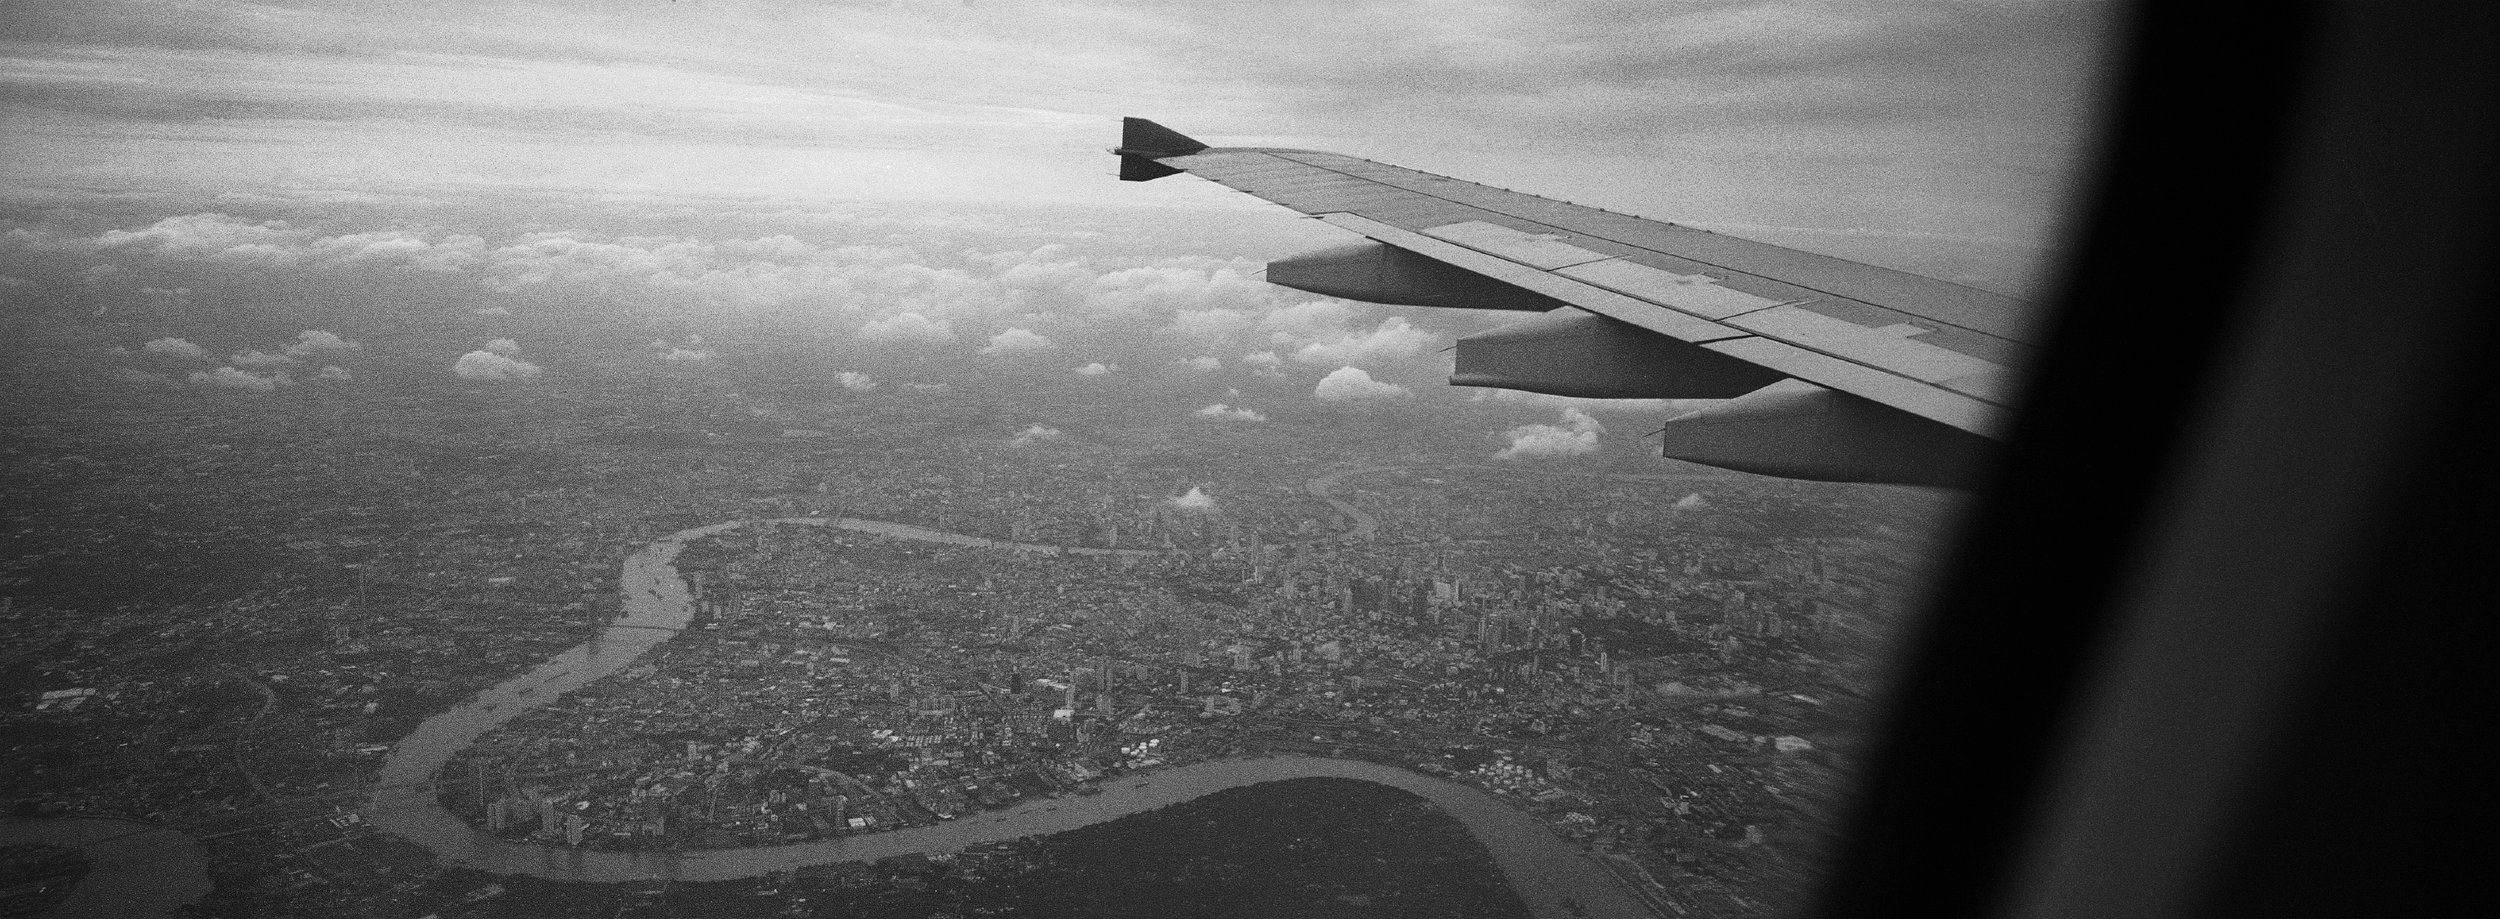  Arriving in Bangkok, Thailand. 2011 